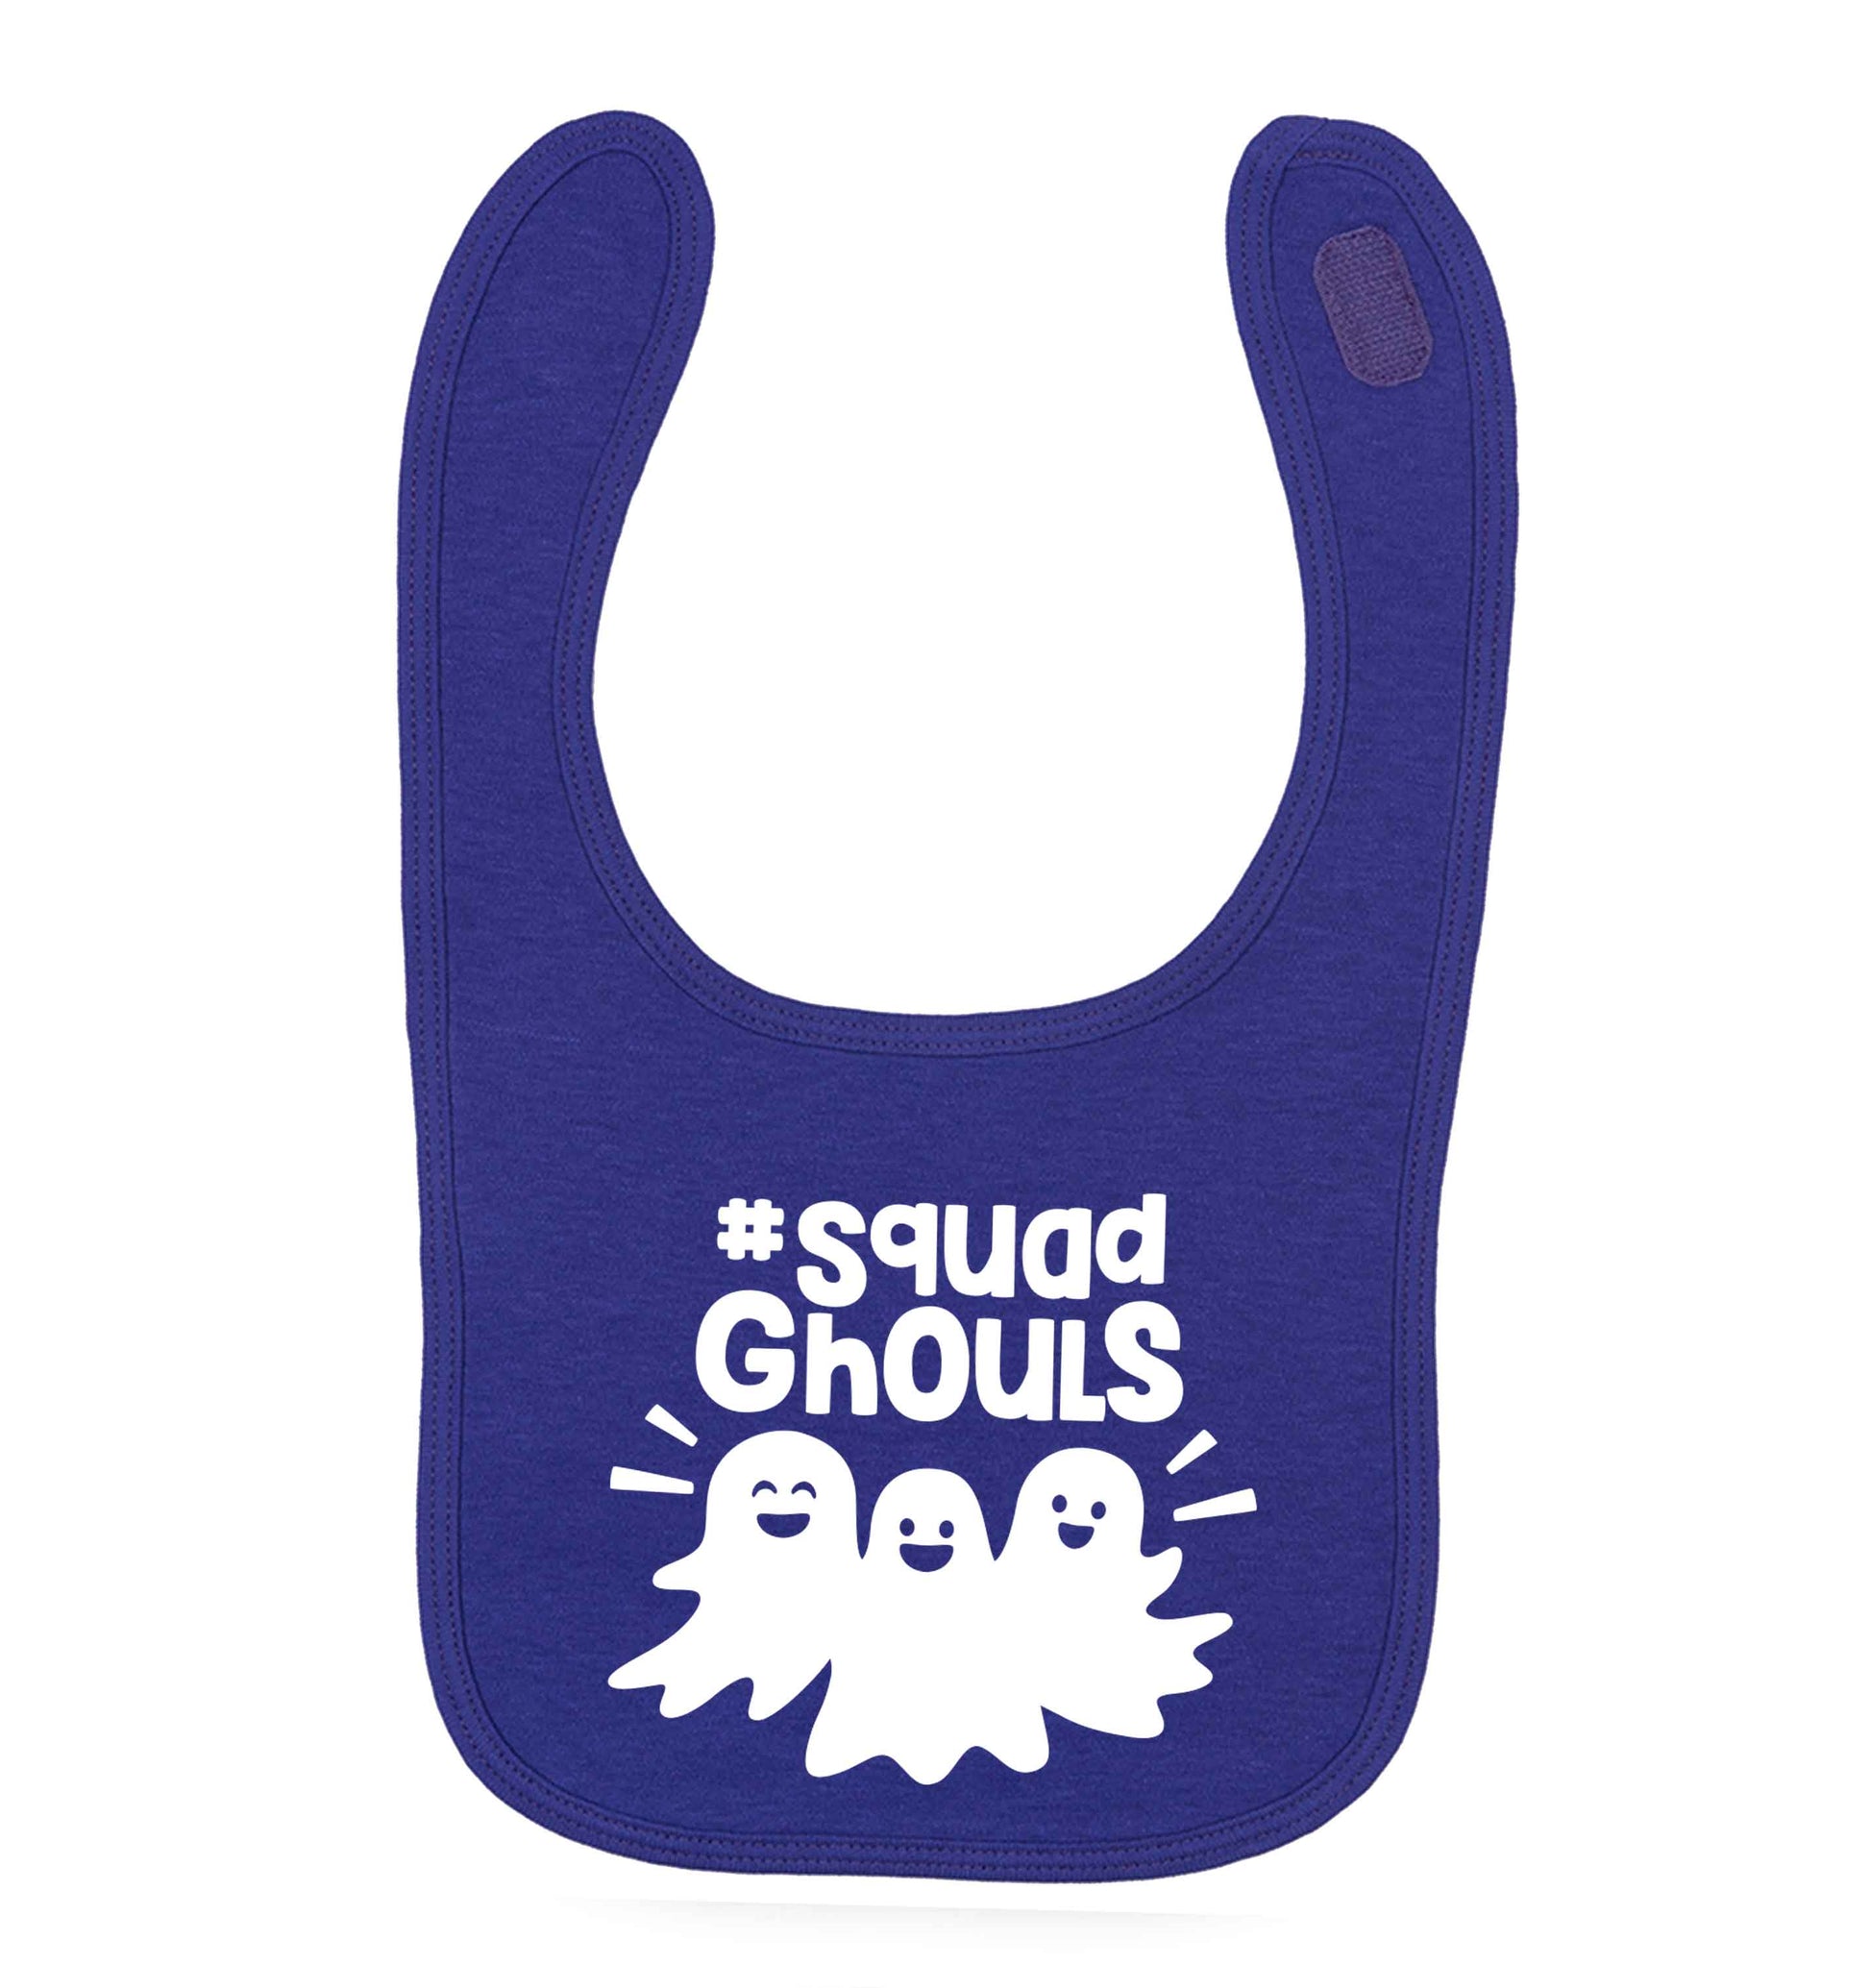 Squad ghouls Kit purple baby bib